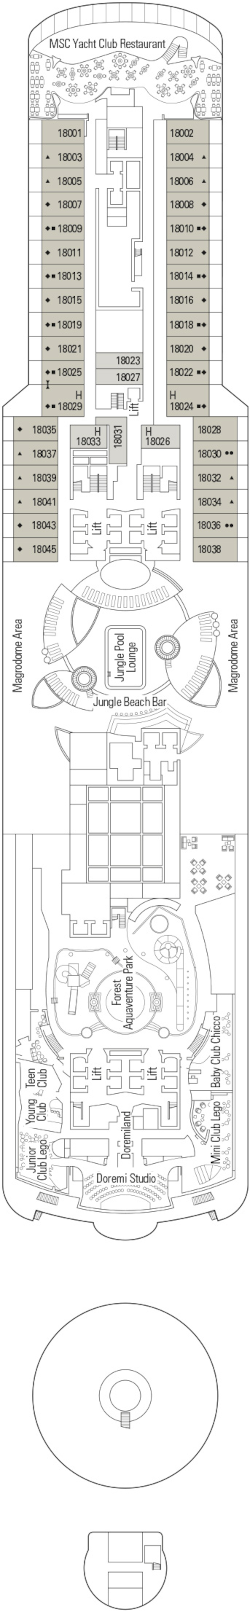 Msc Seaside Playa Paraiso Deck Deck Plan